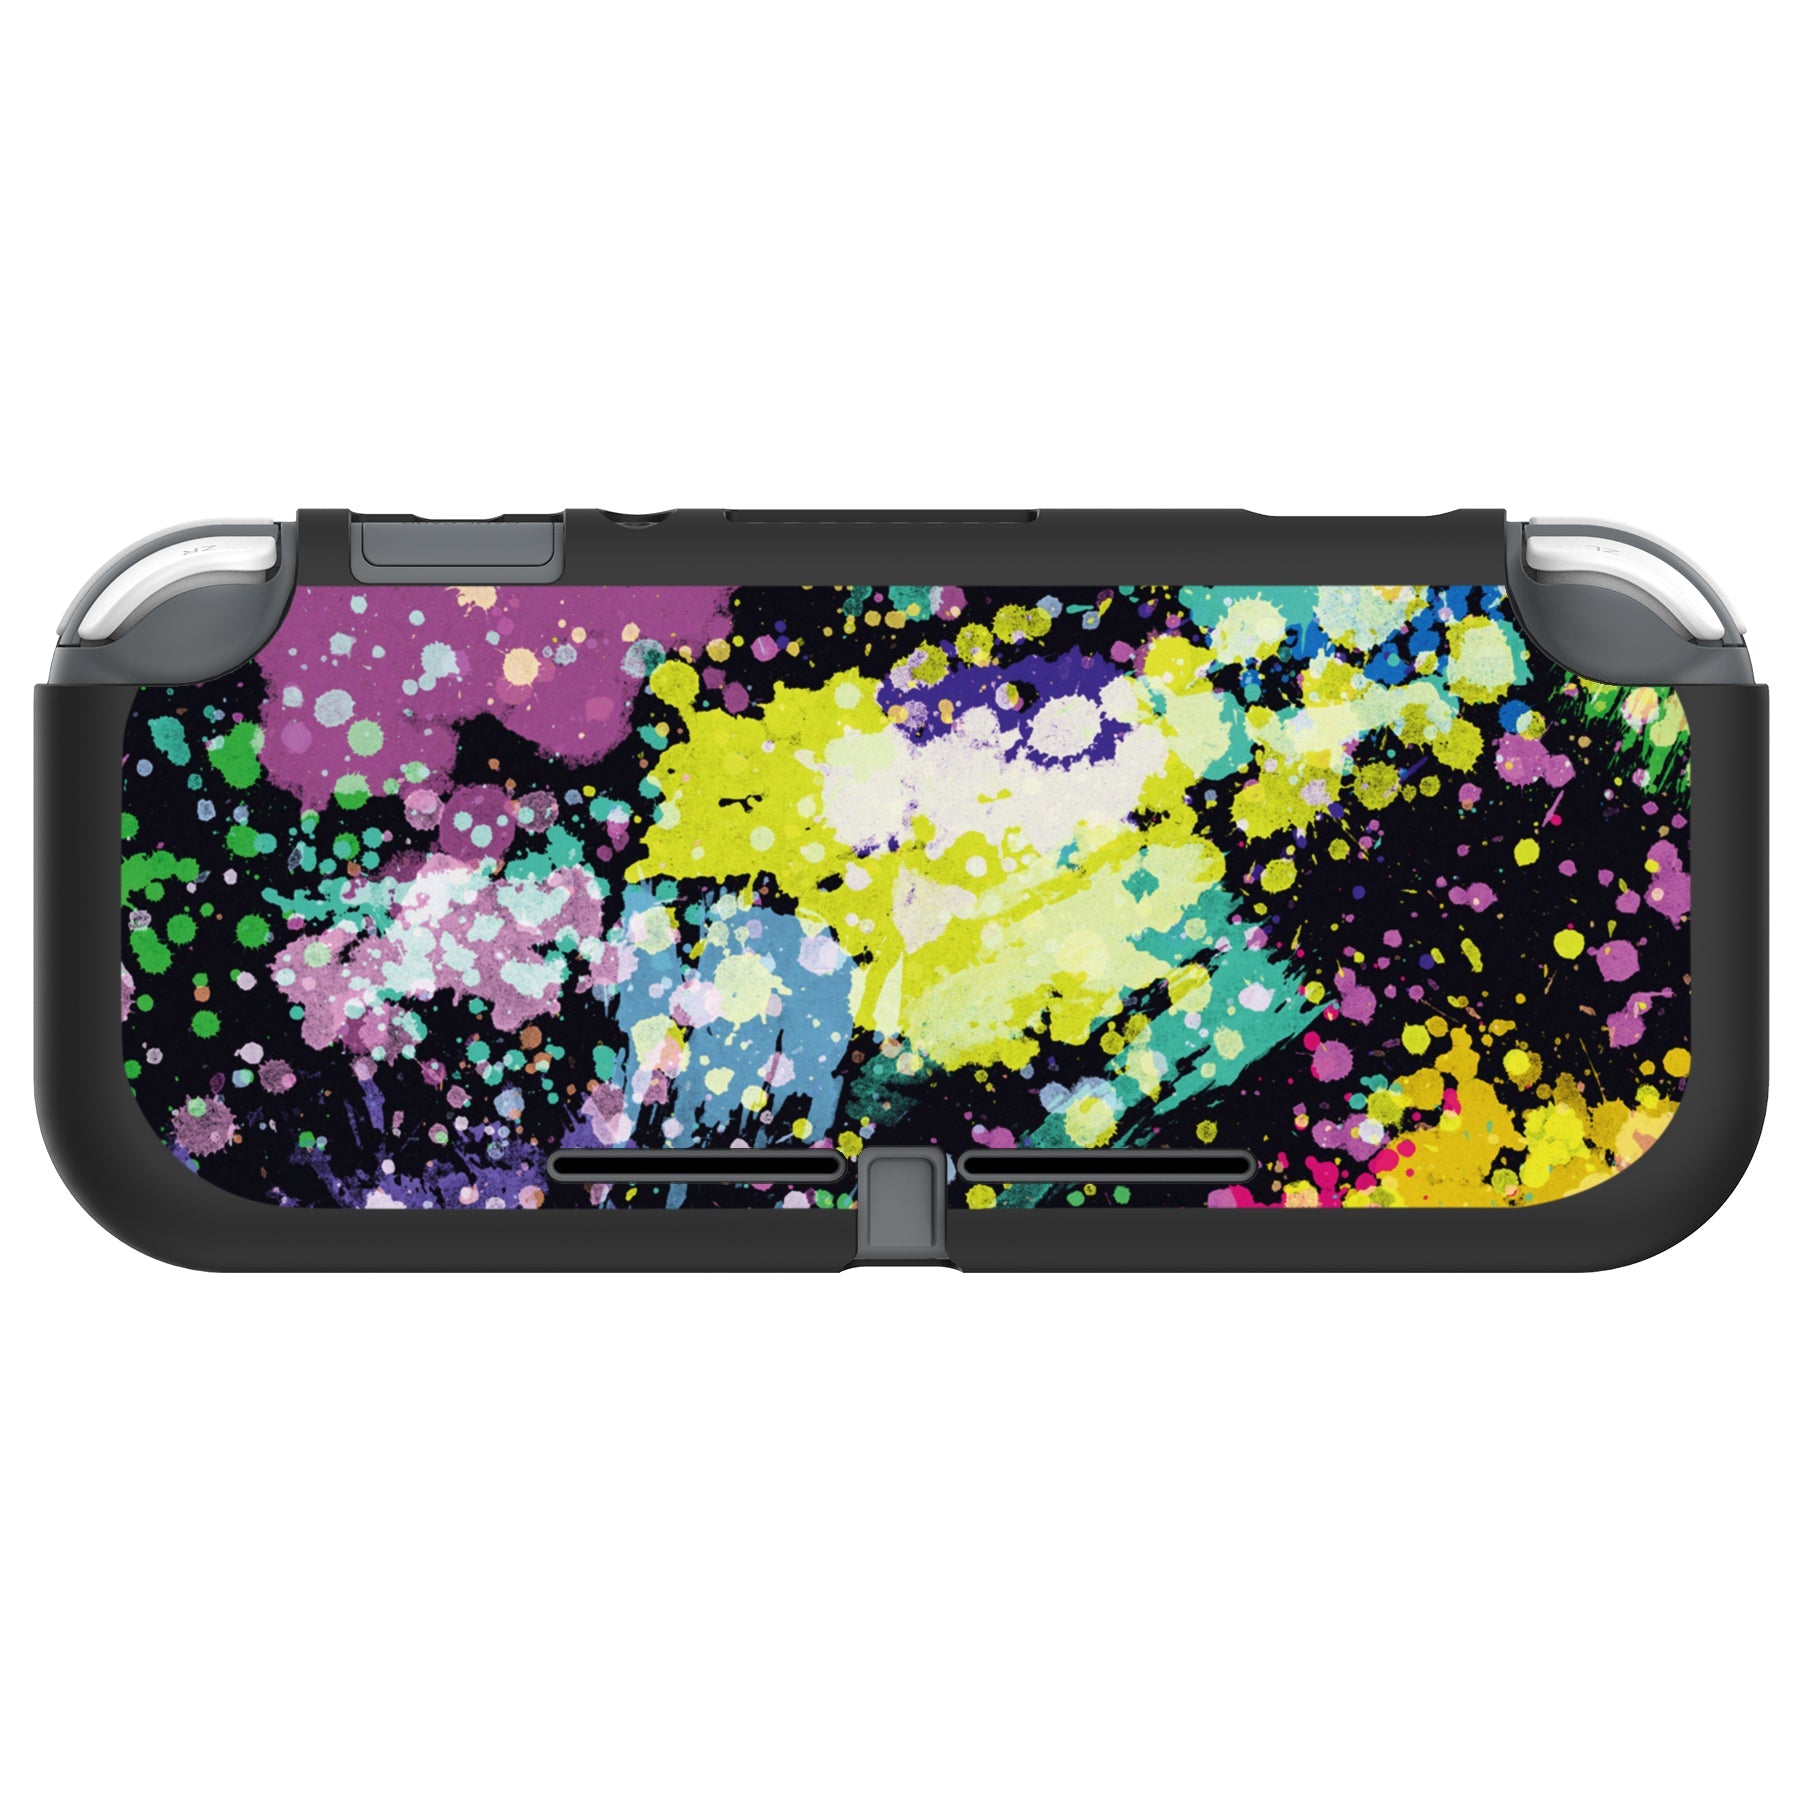 PlayVital Watercolour Splash Custom Protective Case for NS Switch Lite, Soft TPU Slim Case Cover for NS Switch Lite -  LTU6015 PlayVital